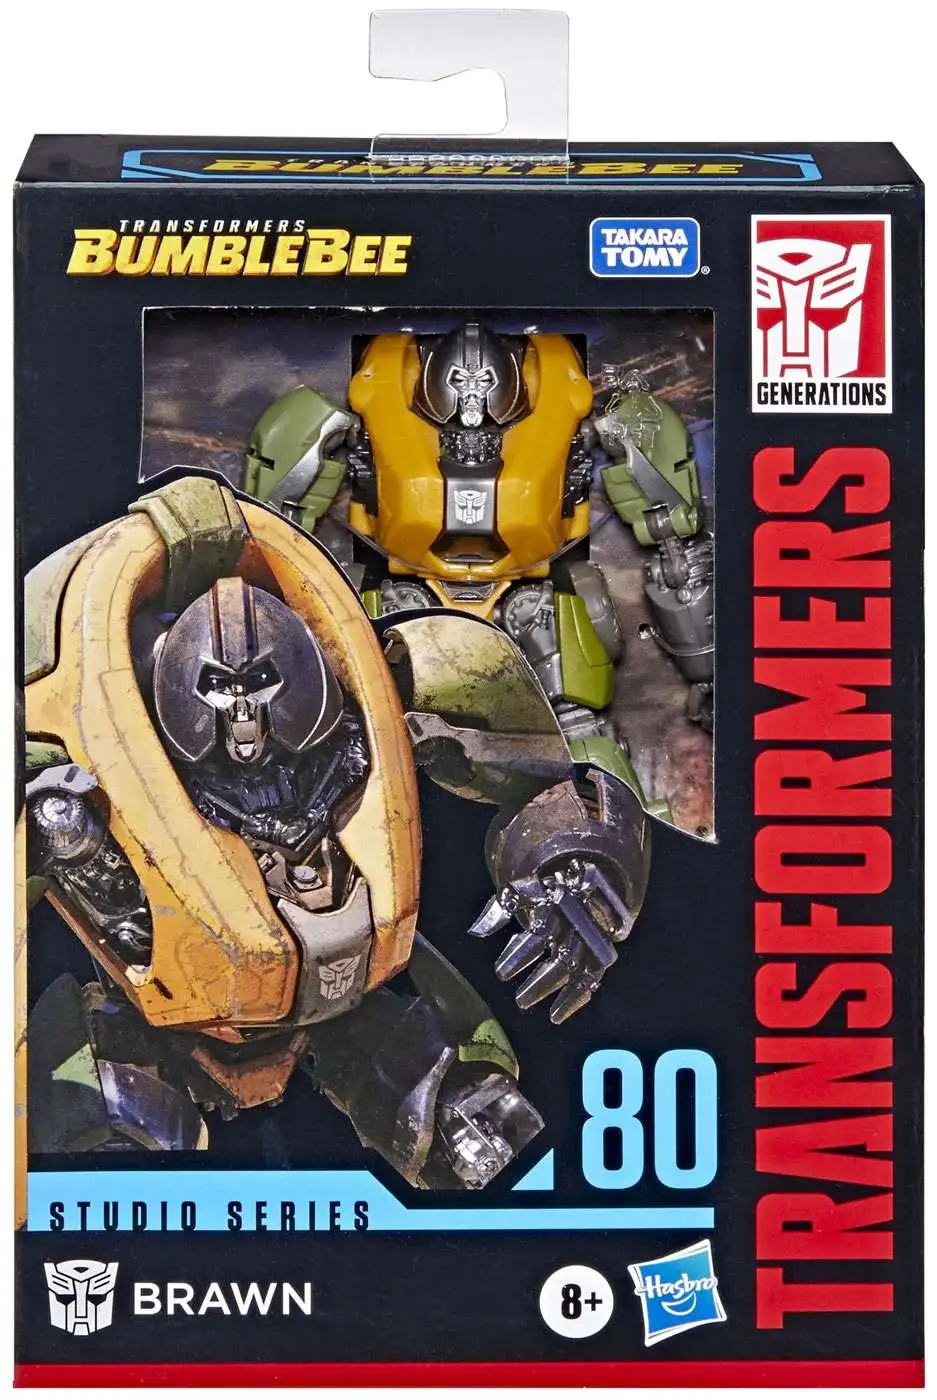 BRAWN Transformers G1 Minibot 100% complete TAKARA HASBRO VERY NICE!!! 